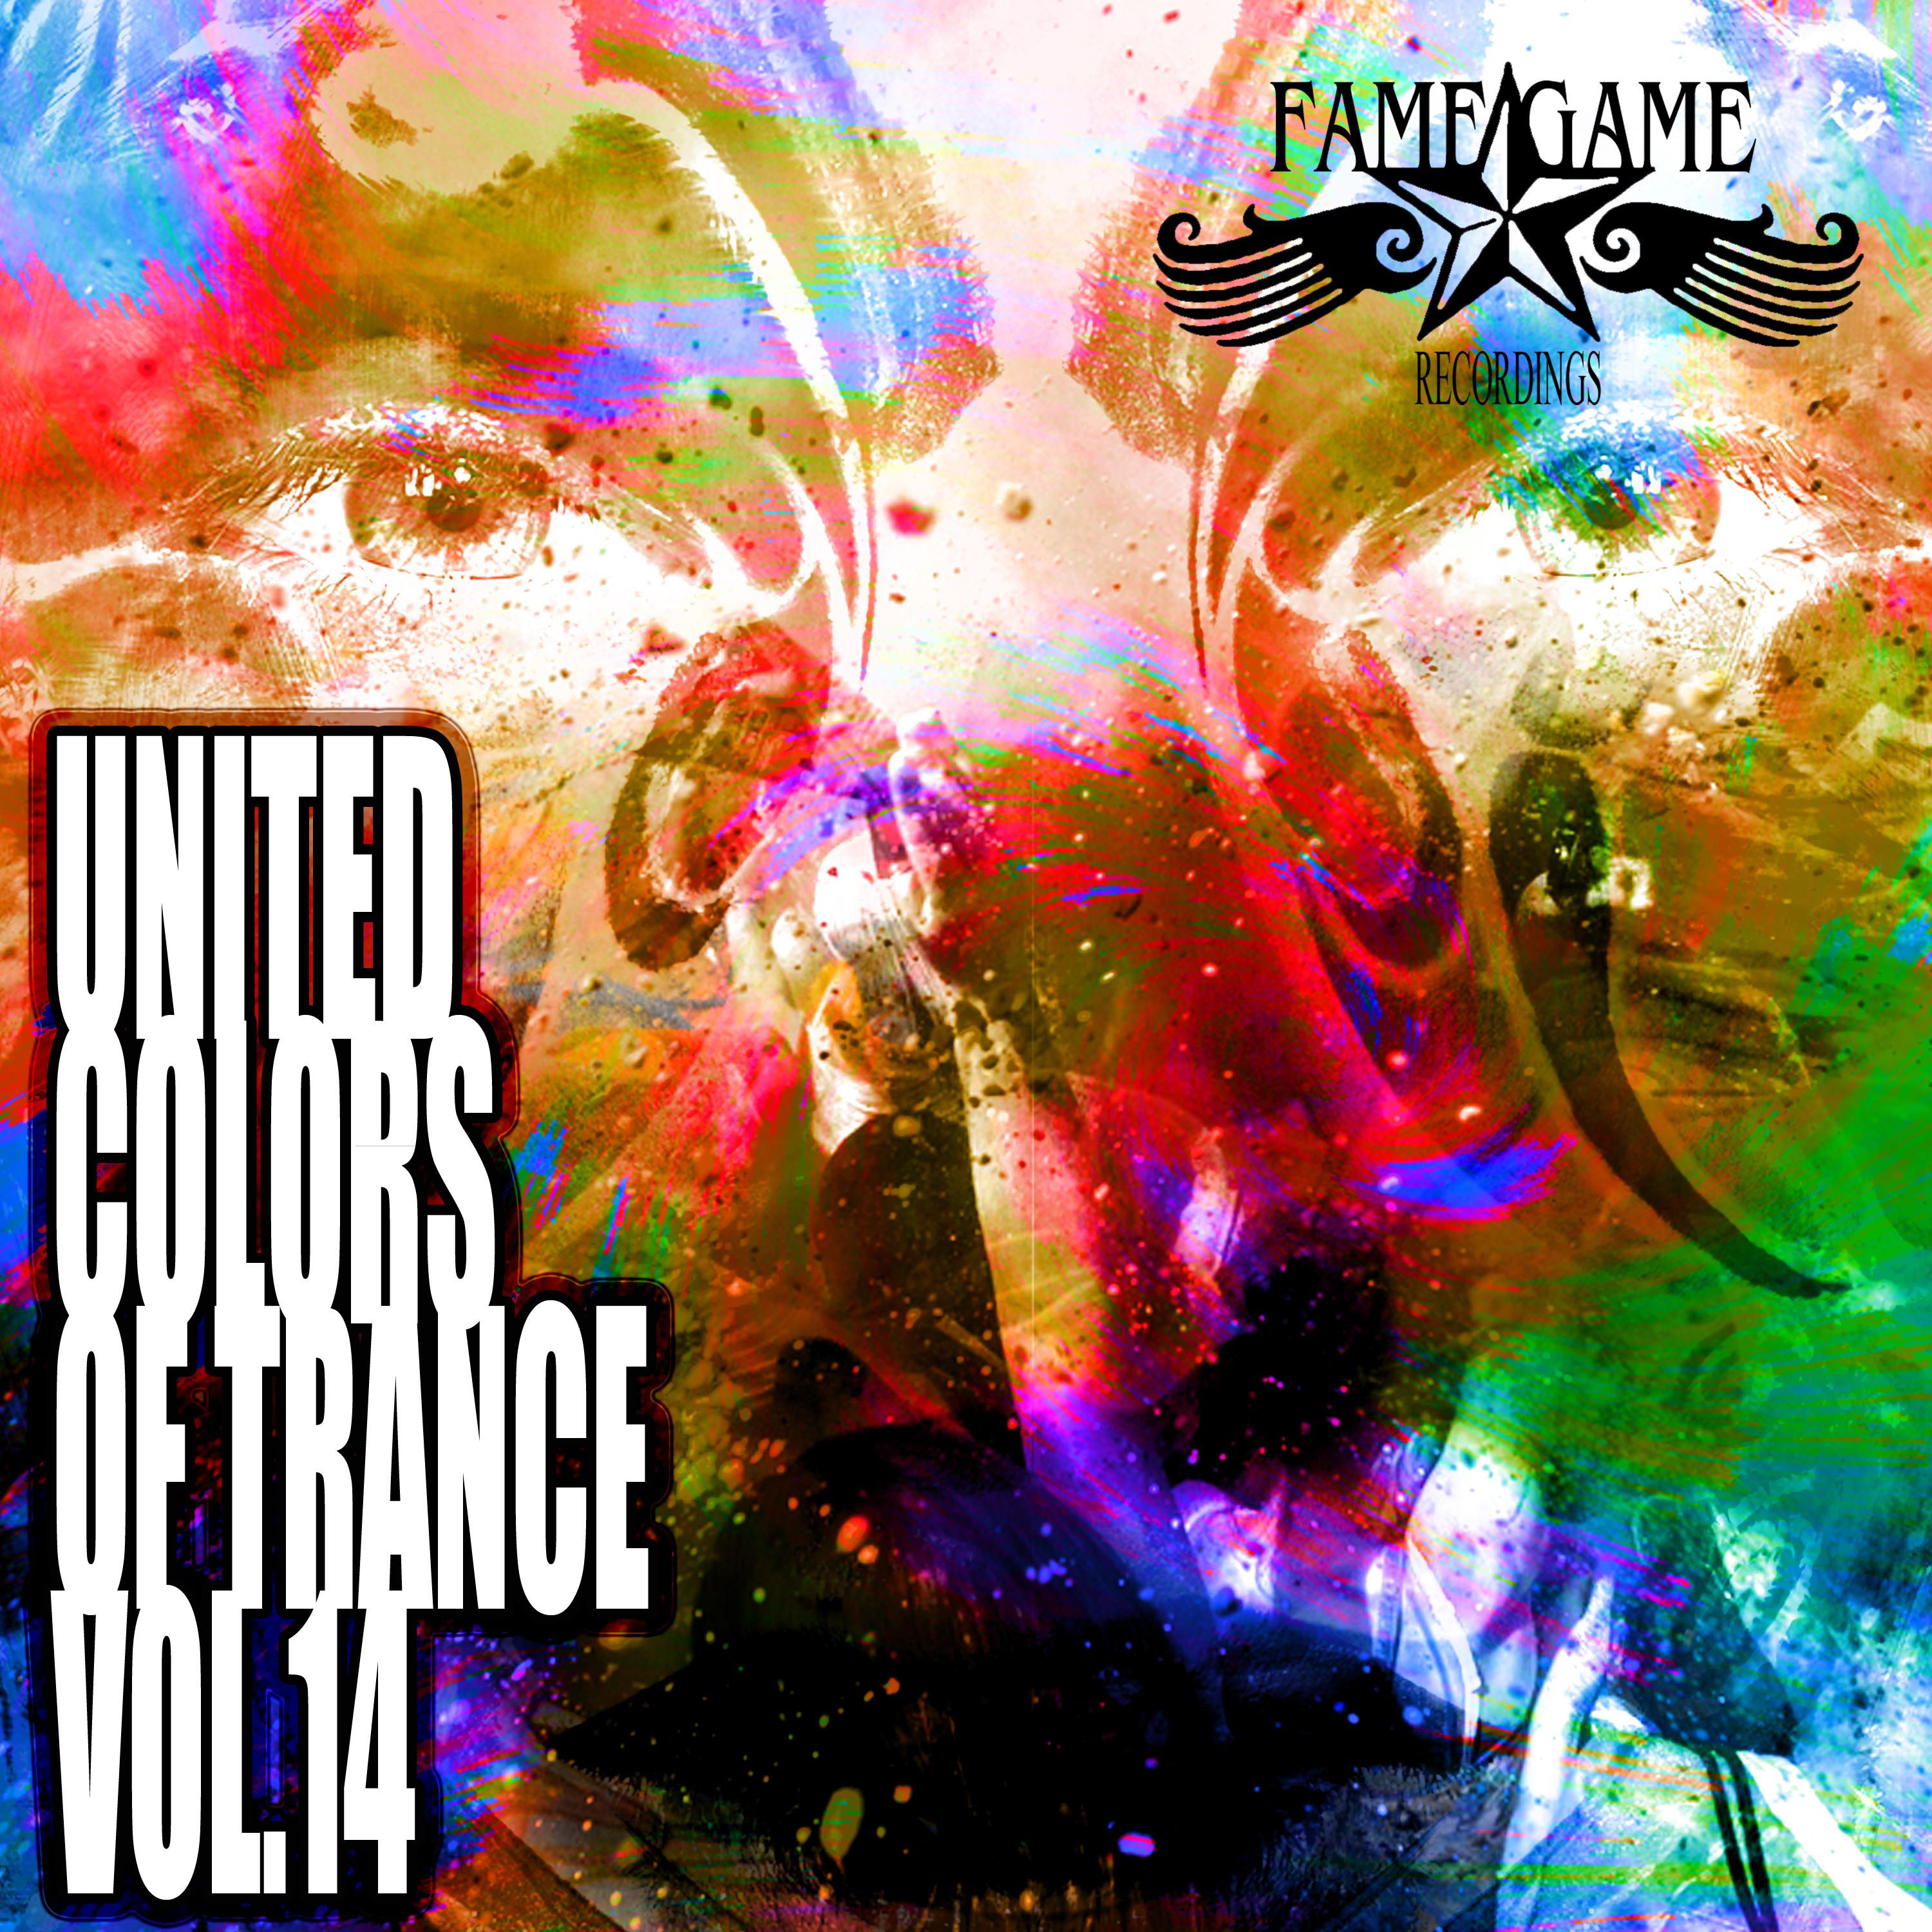 United Colors of Trance, Vol. 14